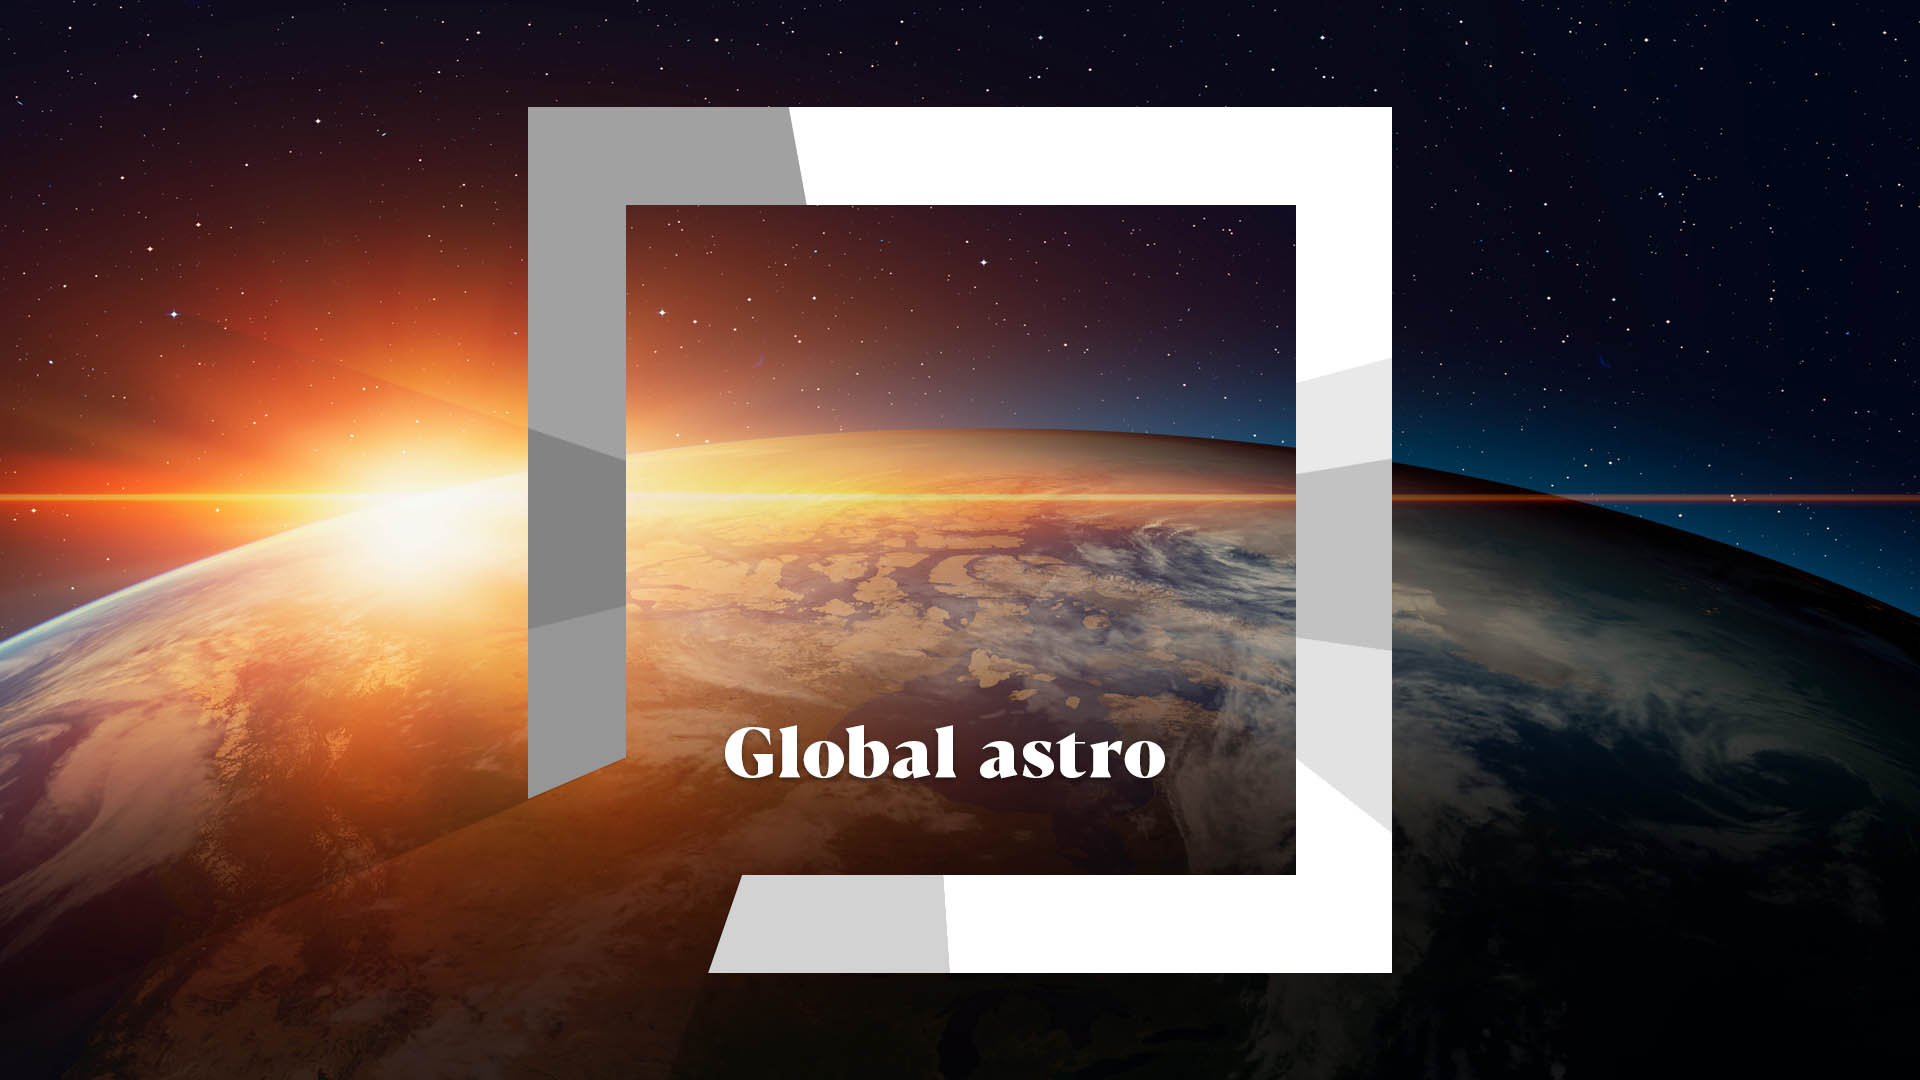 Global astro